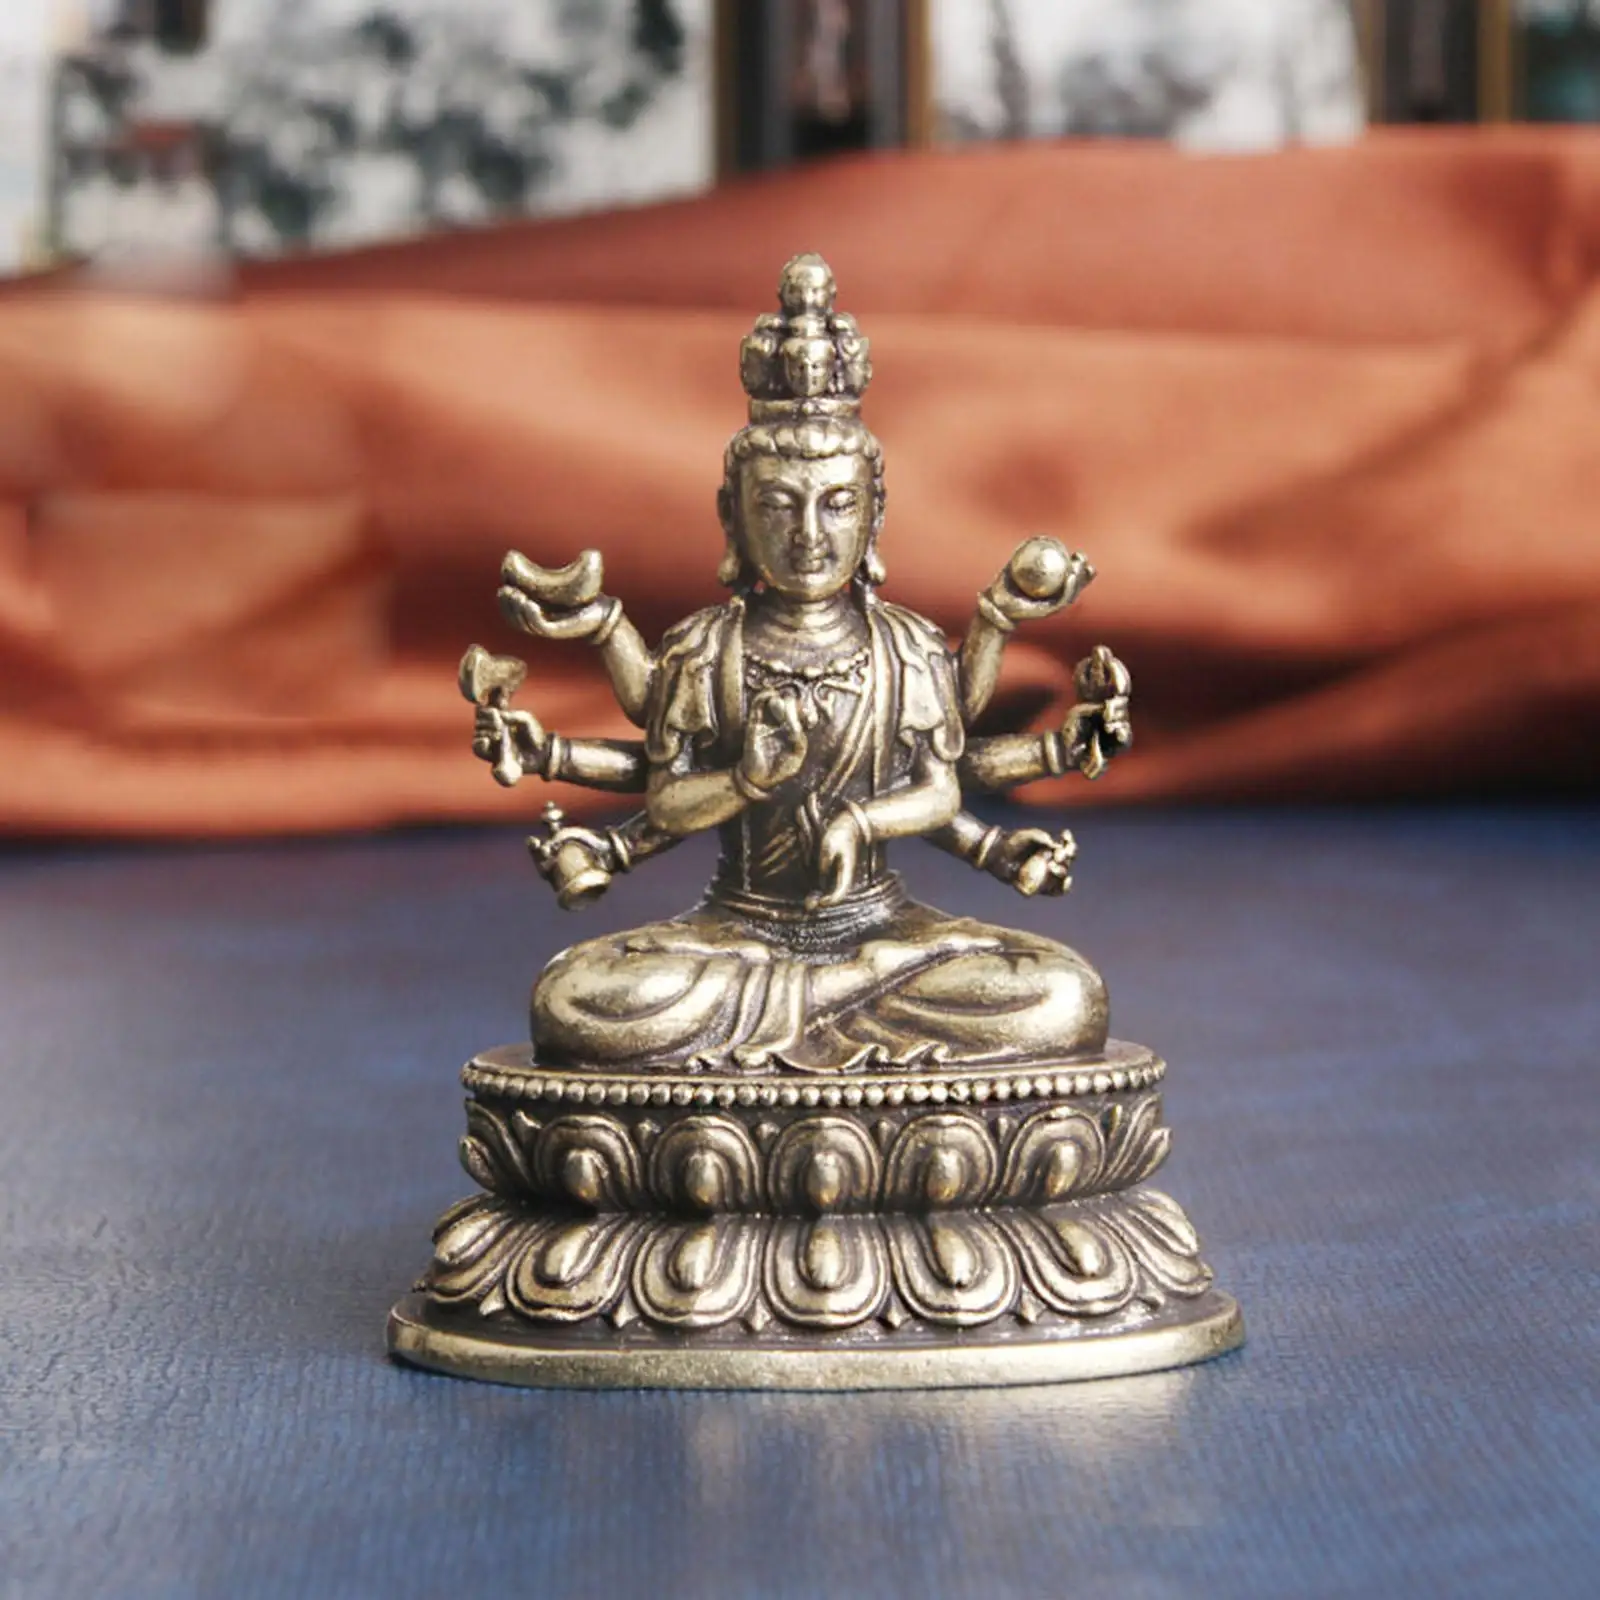 Guan Yin Statue Buddha Statue Crafts Figurine for Tea House Shelf Decoration